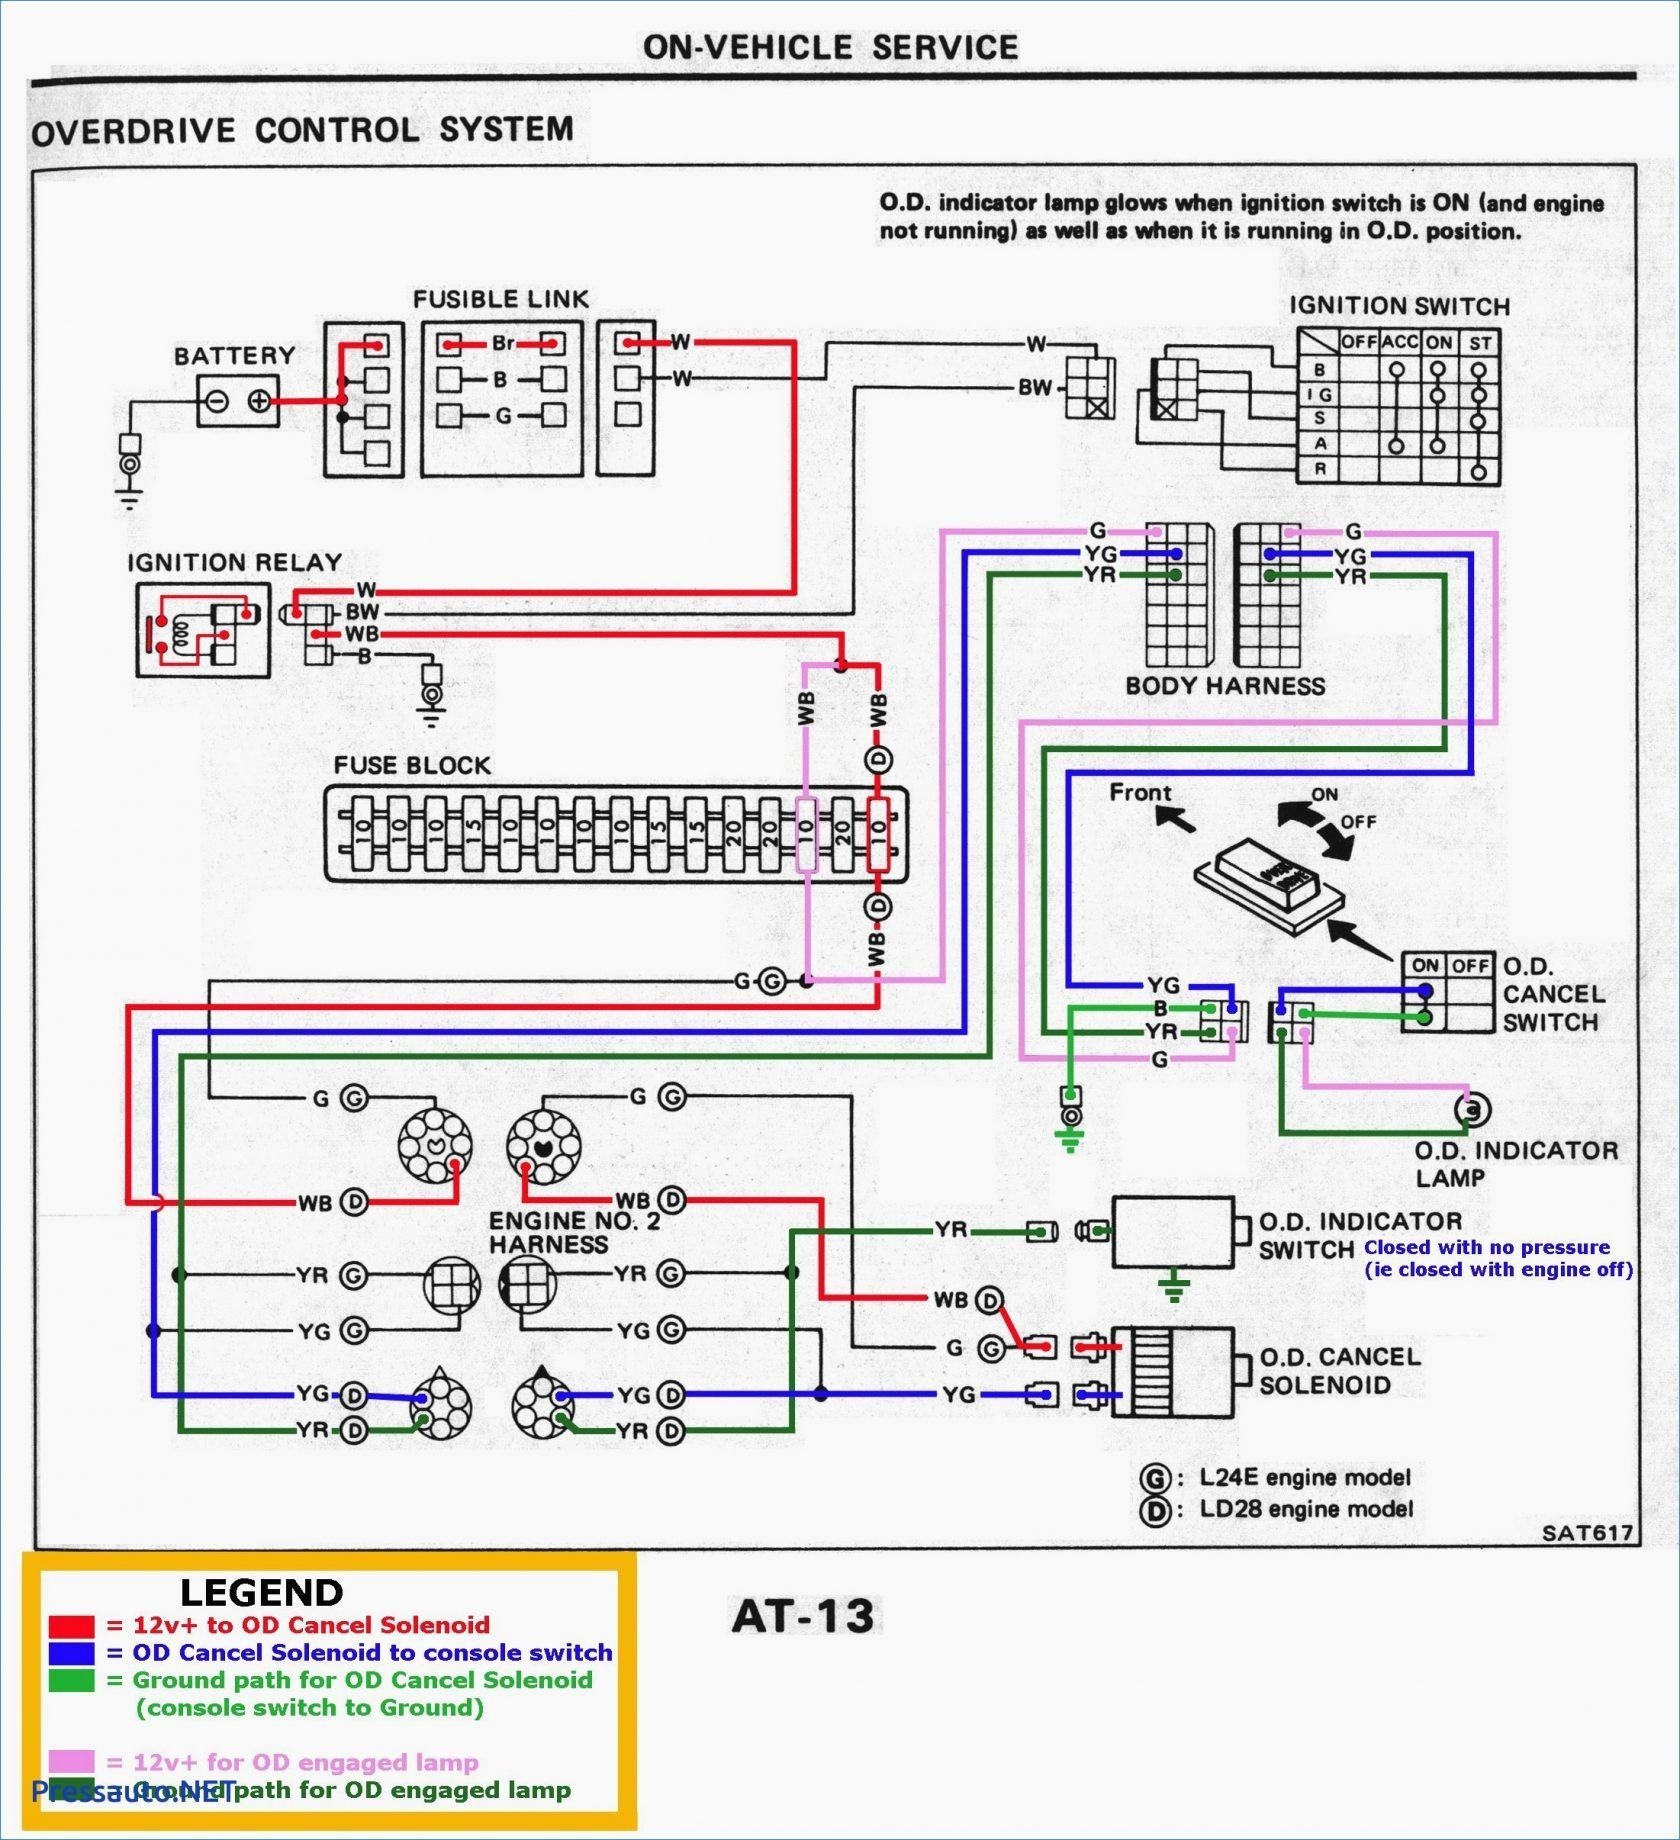 Basic Car Stereo Wiring Diagram Car Wiring Harness Diagram Wiring Diagram toolbox Of Basic Car Stereo Wiring Diagram